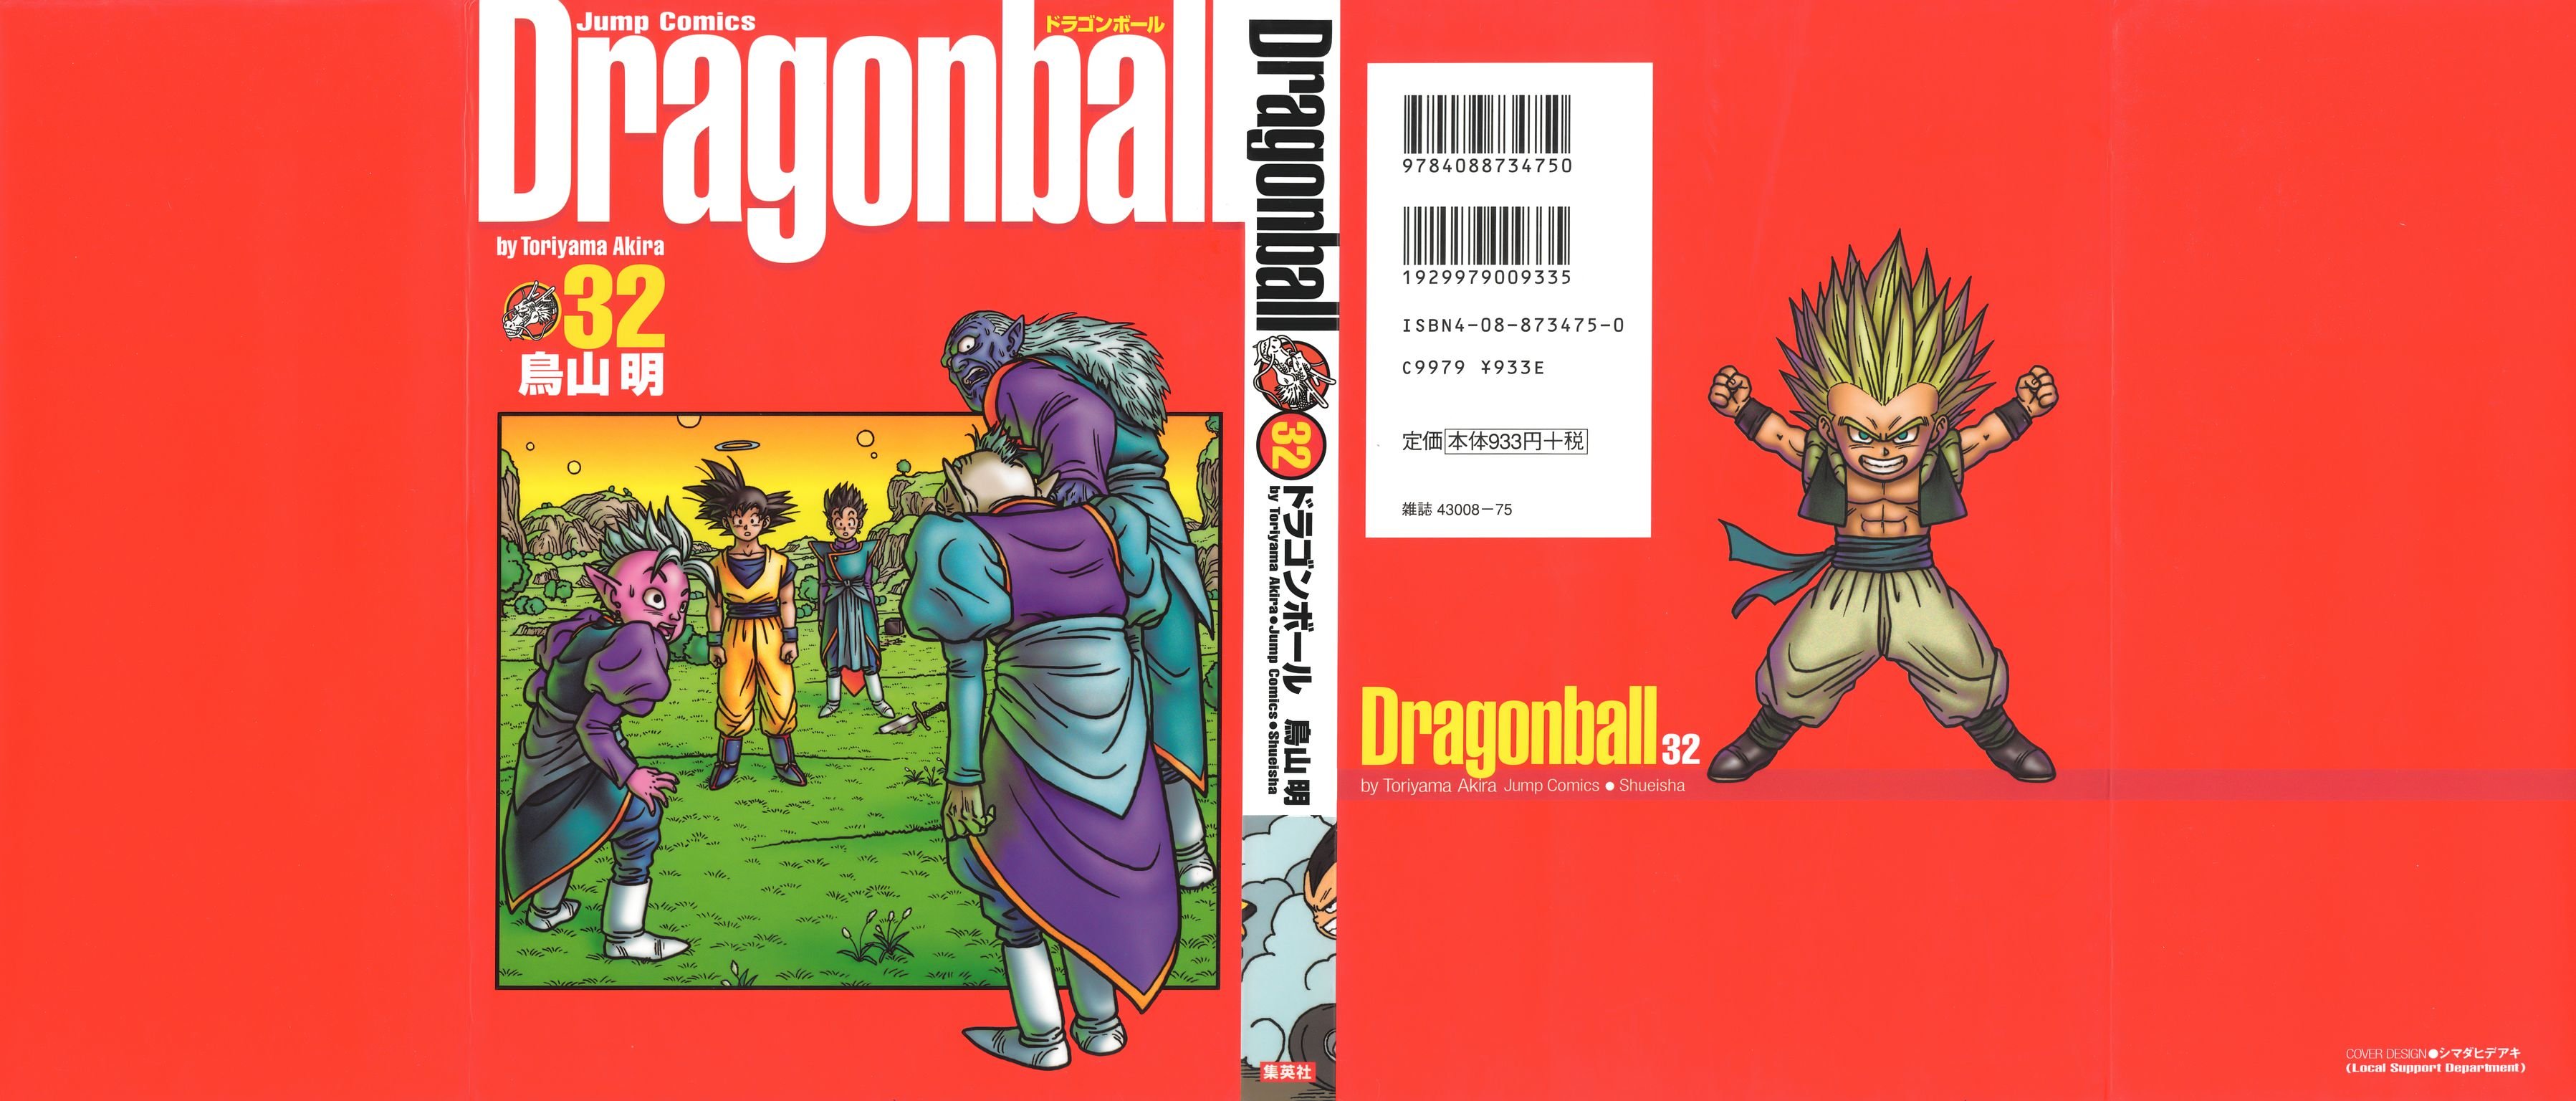 dragonballmangacover28.jpg